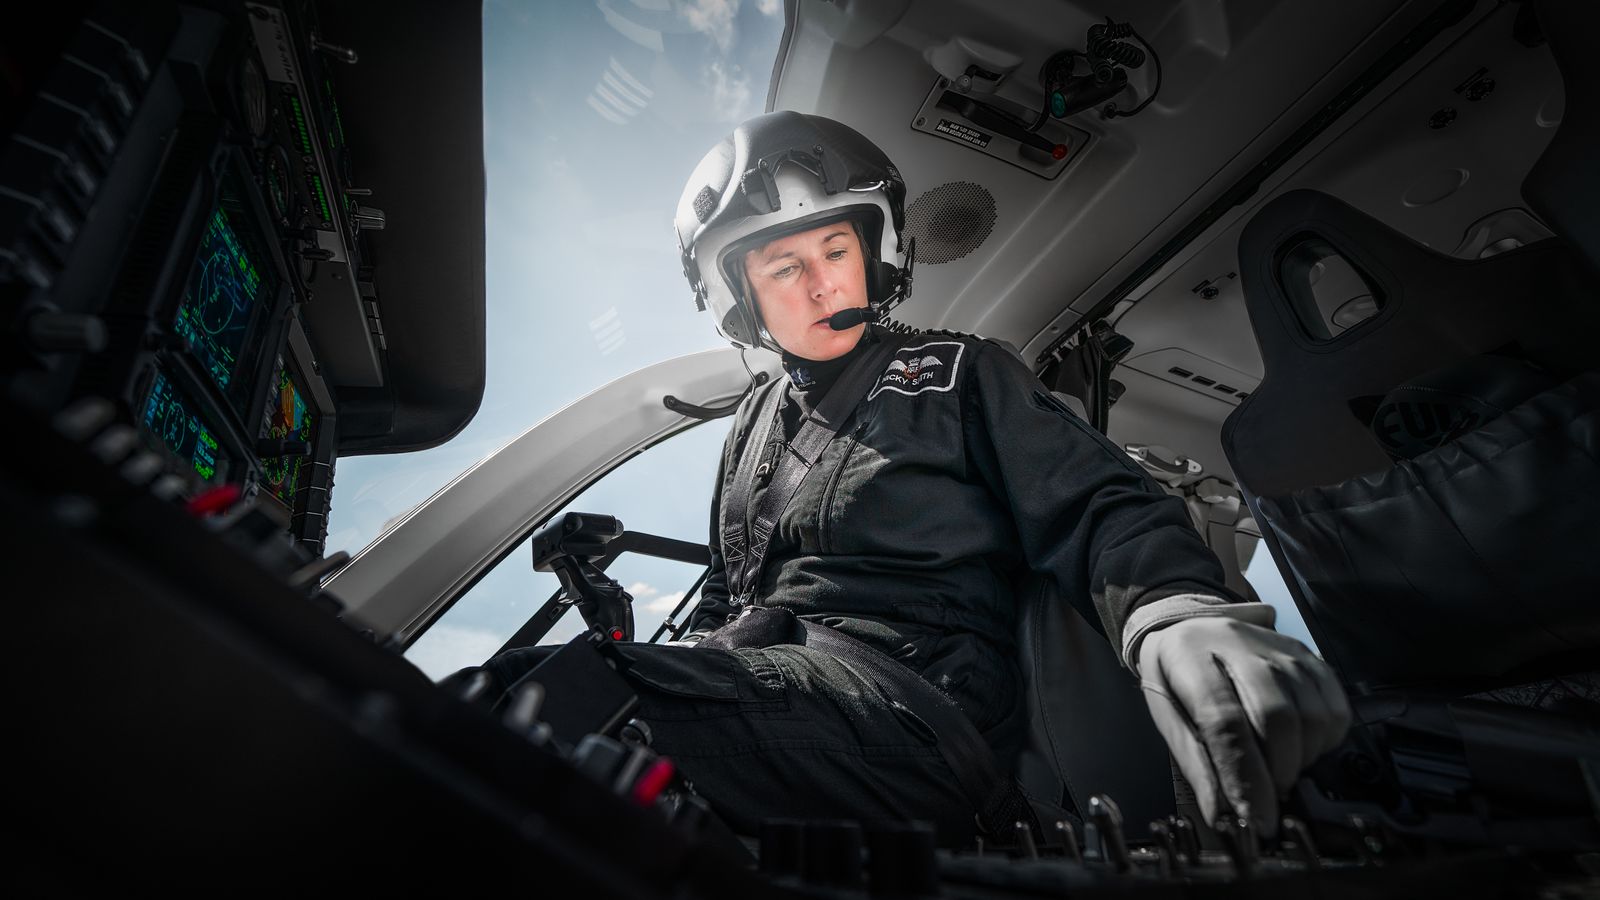 Air Ambulance Pilot